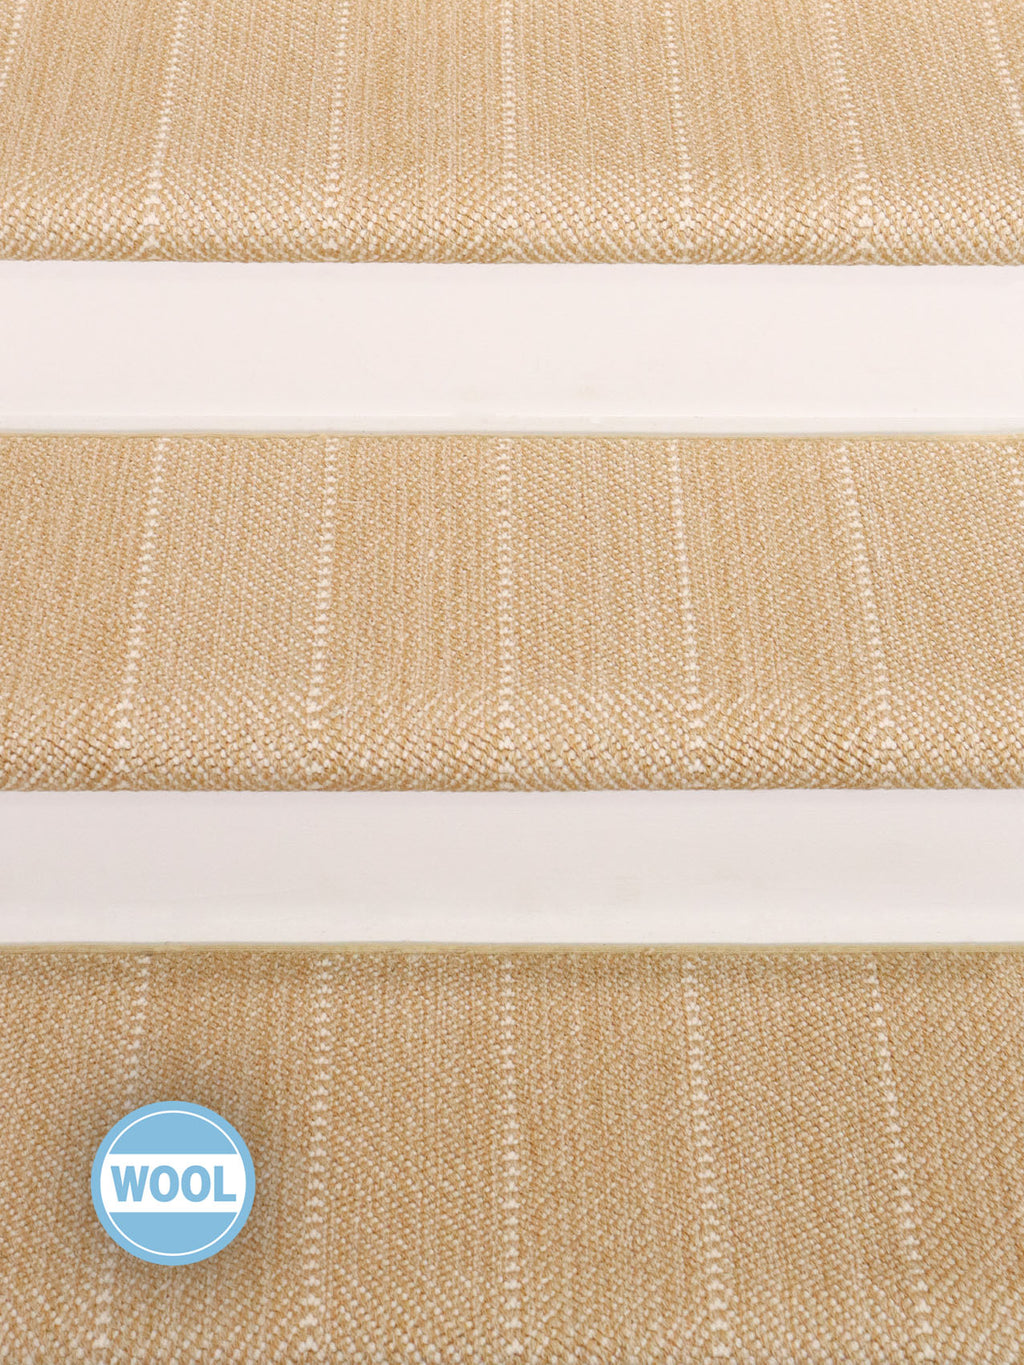 Oak Valley Sisal Wool Blend, Seagrass Stair Treads